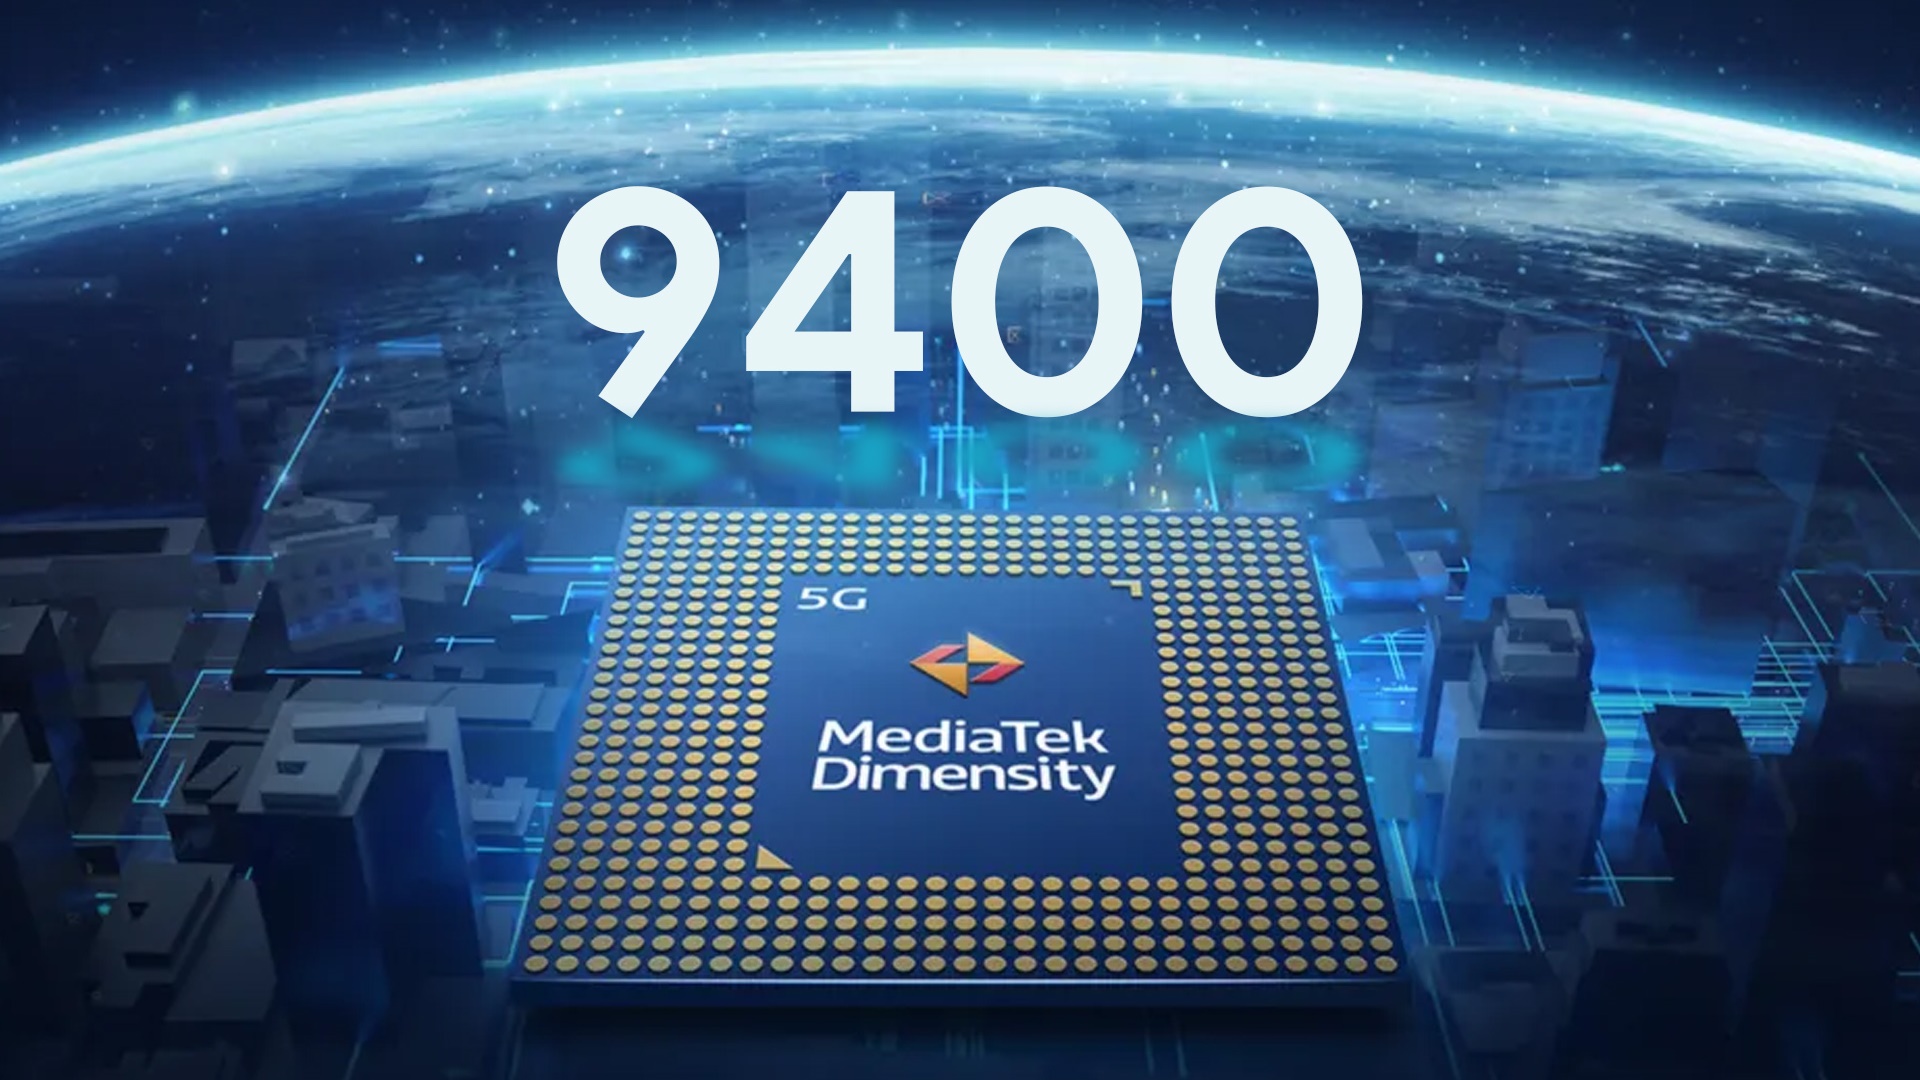 MediaTek's Dimensity 9400 SoC could contain more than 30 billion transistors